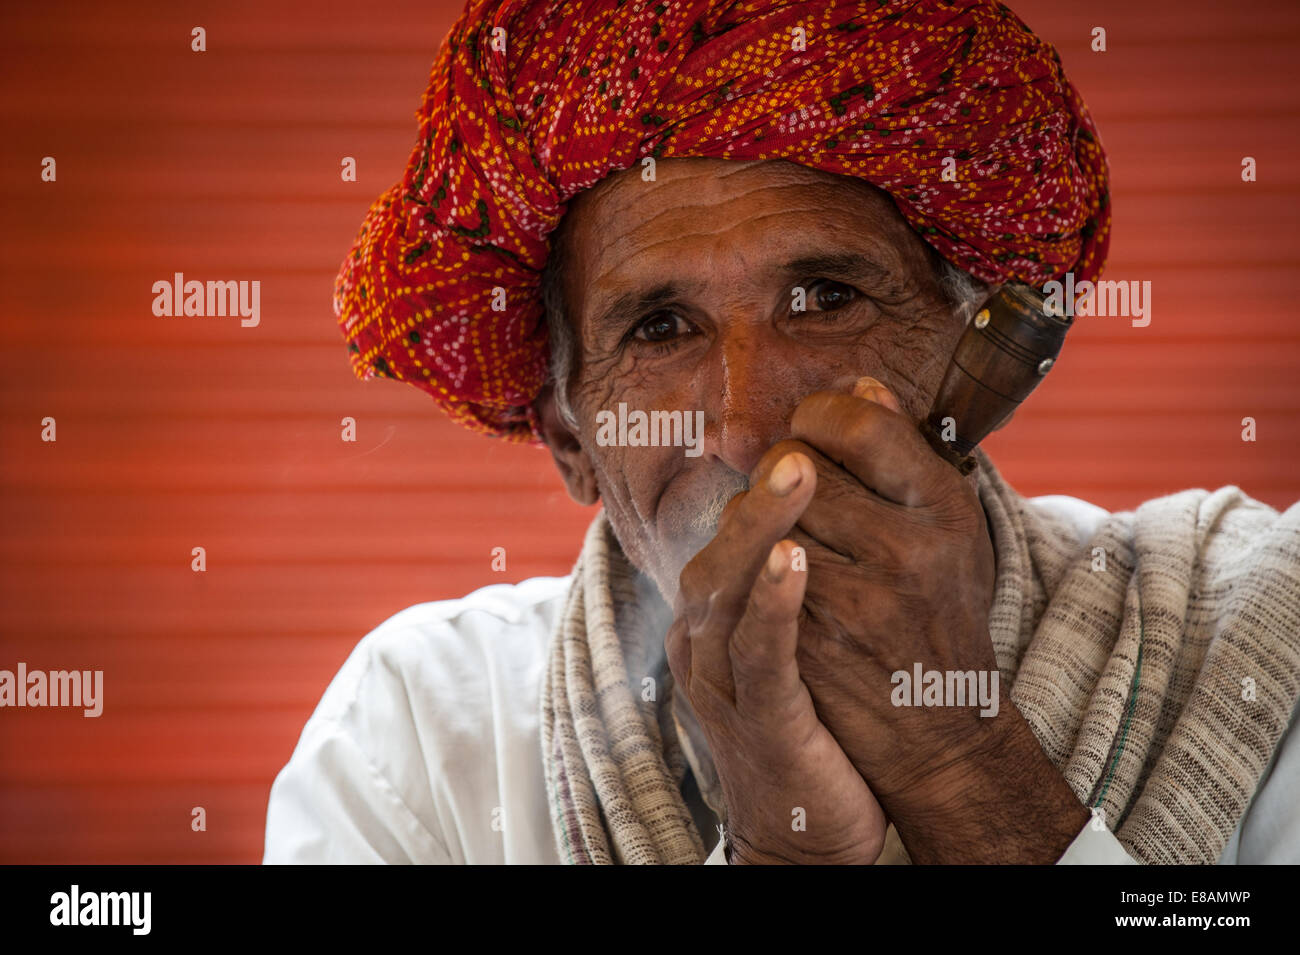 Elderly Indian man smoking traditional pipe Stock Photo